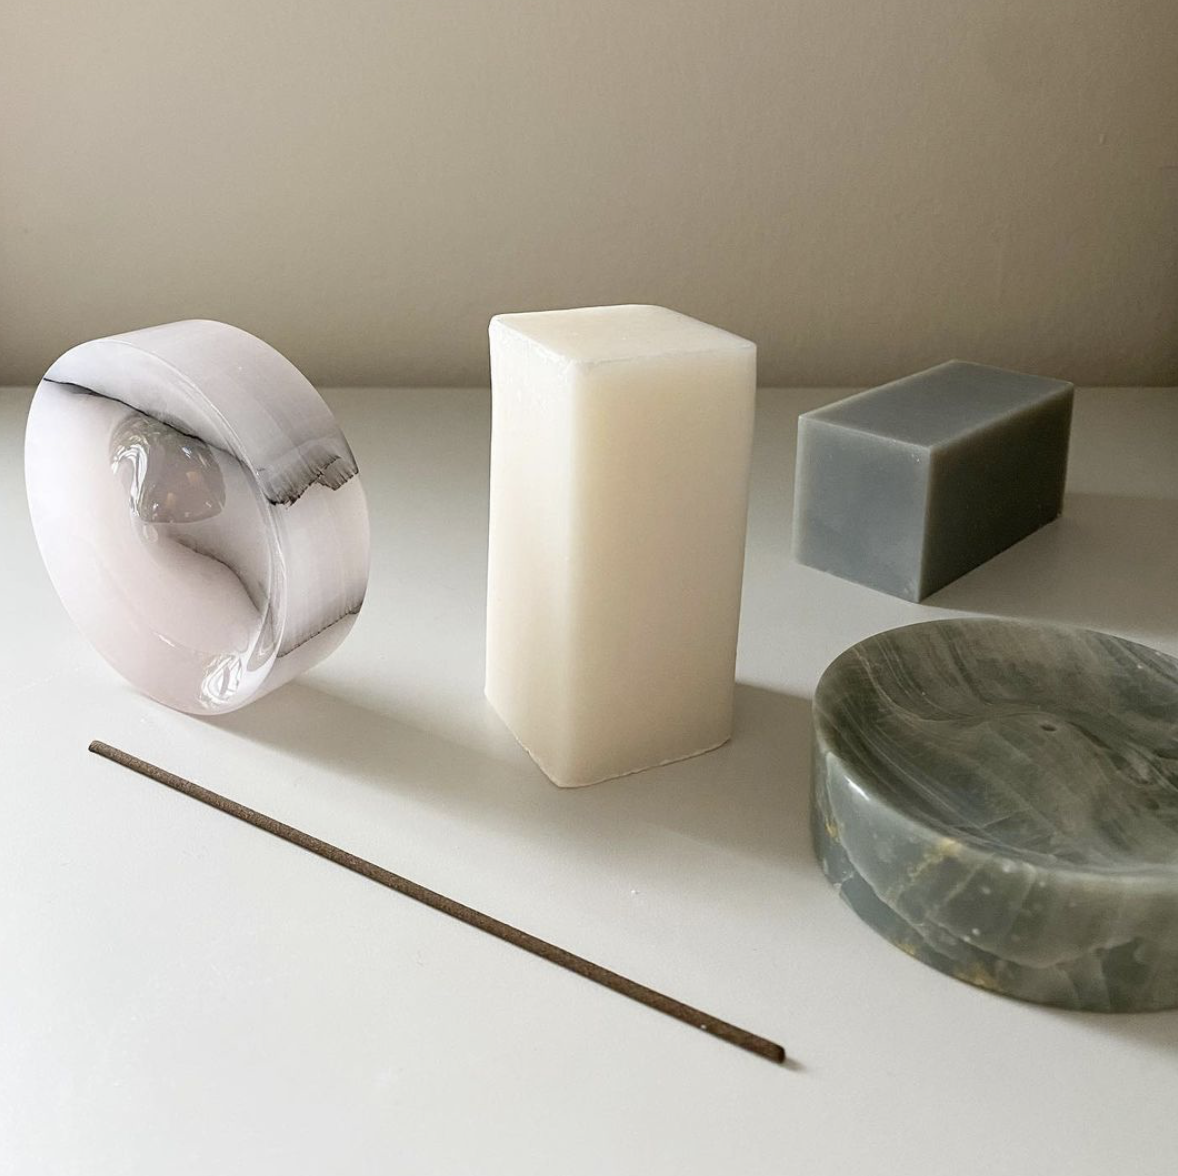  Binu Binu — soap, incense, and marble holders 